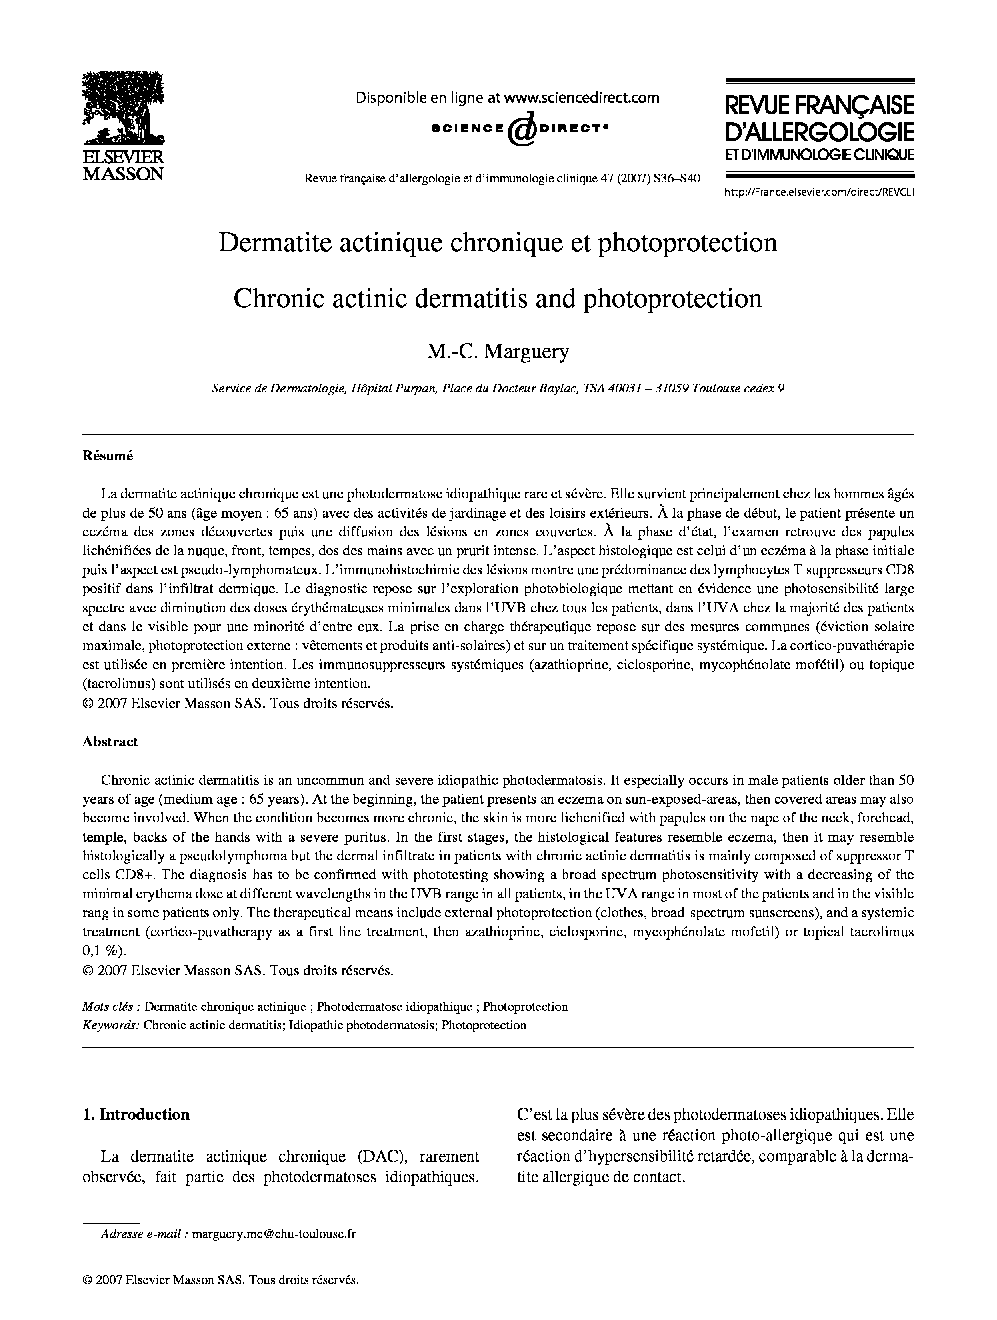 Dermatite actinique chronique et photoprotection